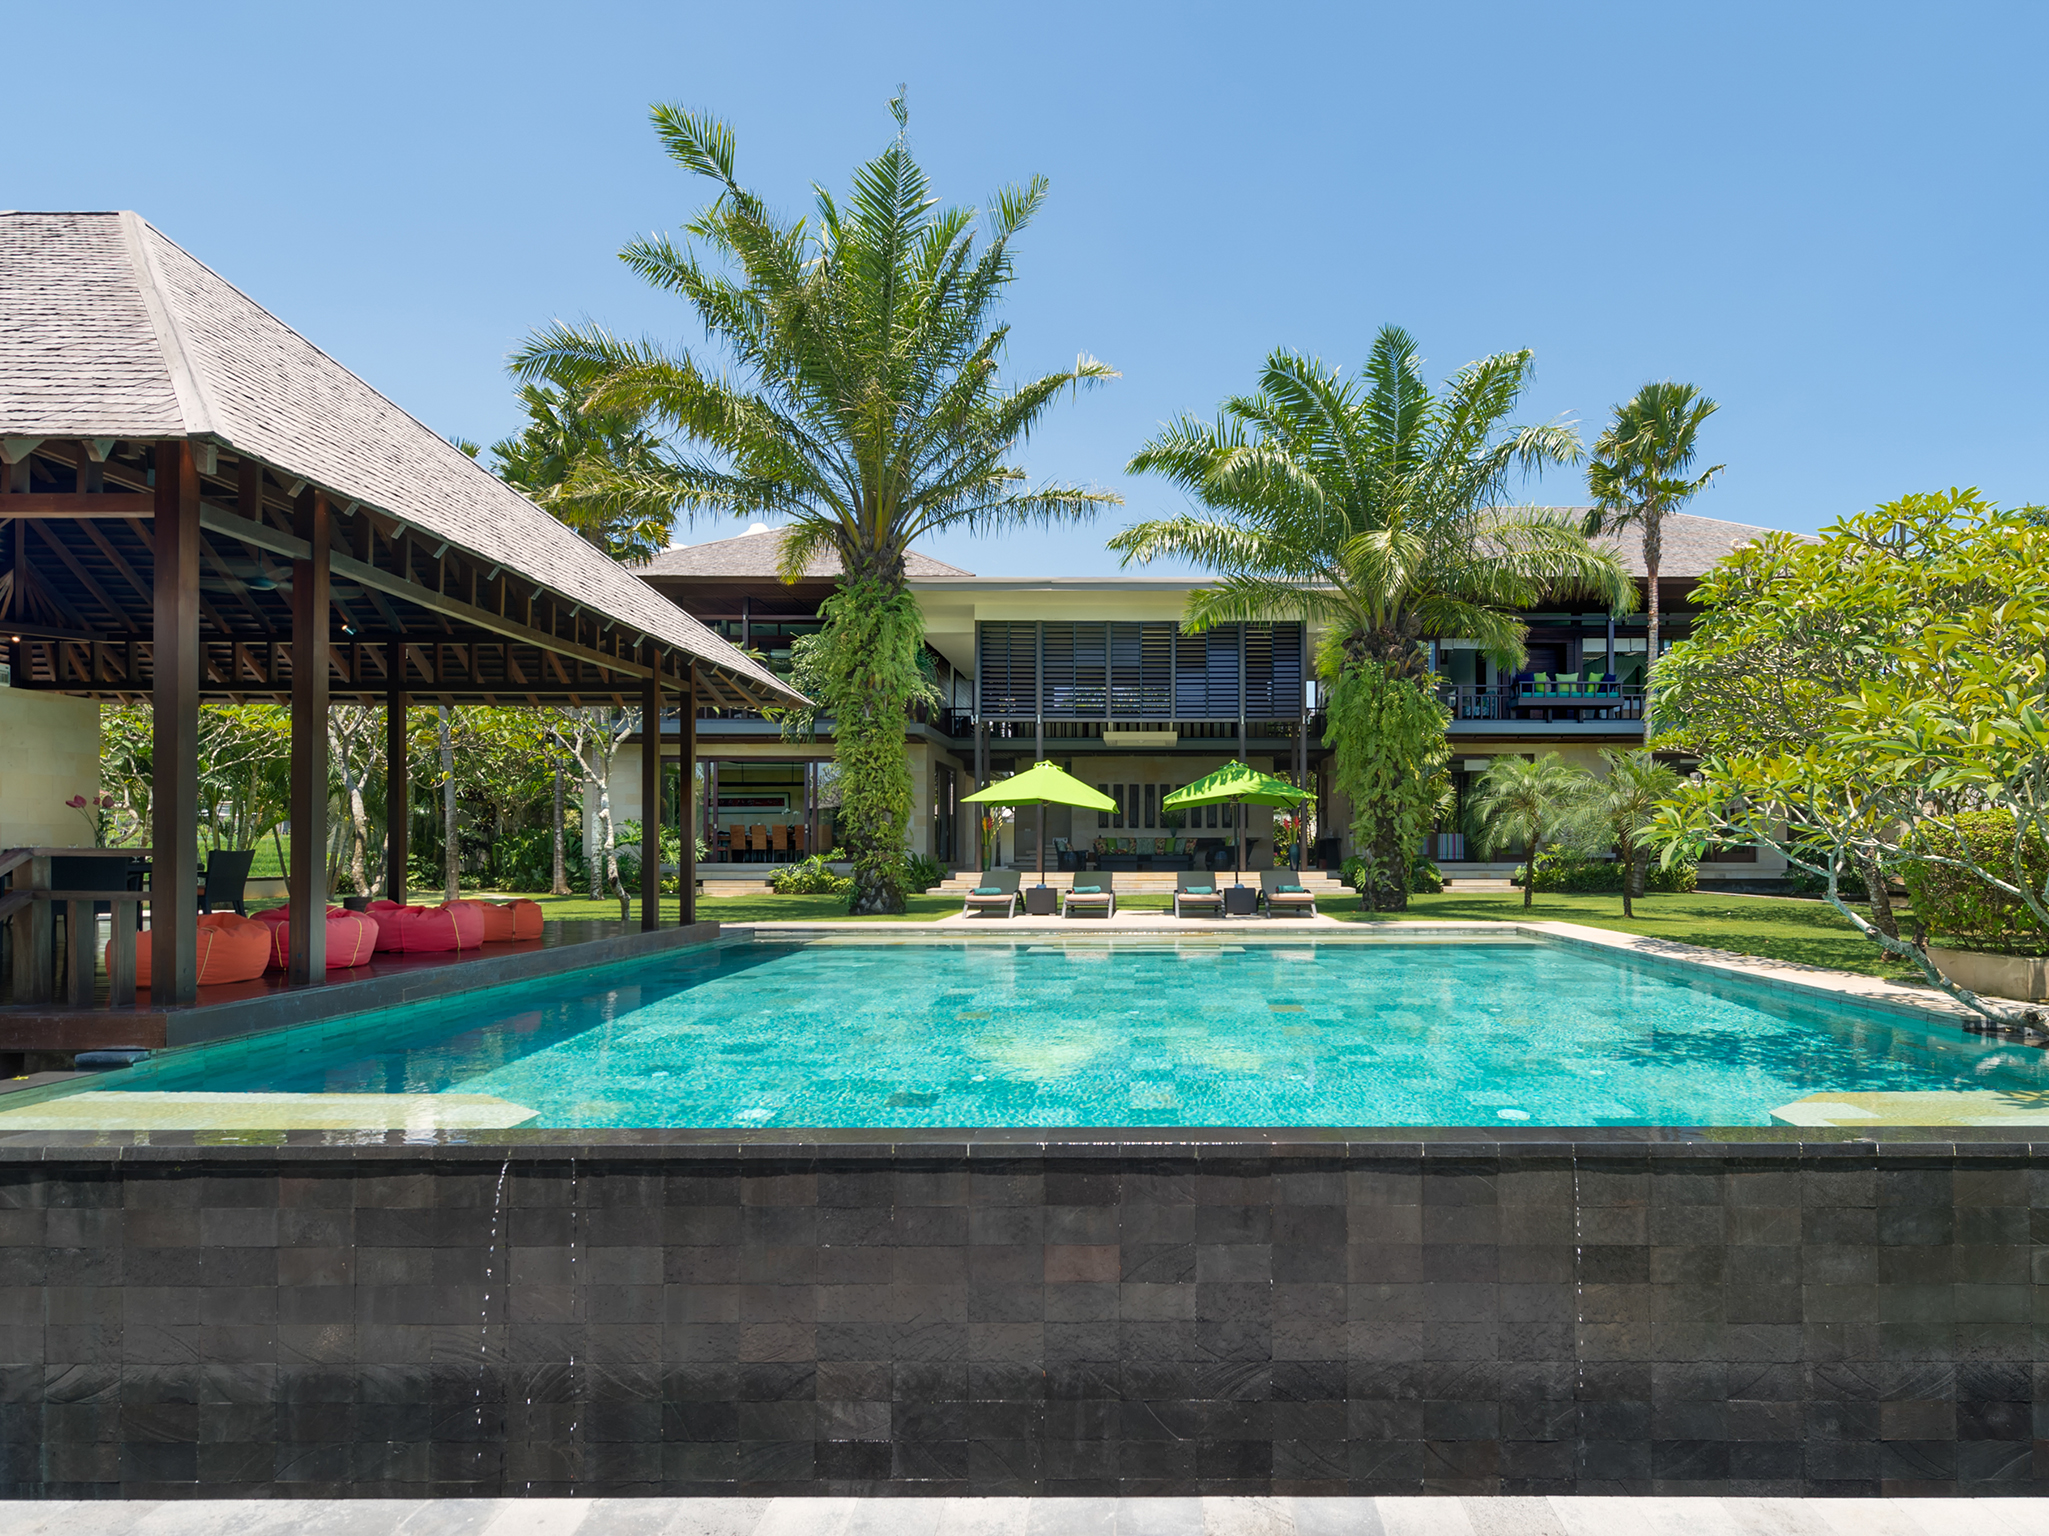 Bendega Nui - Pool to villa view - Bendega Nui, Canggu, Bali